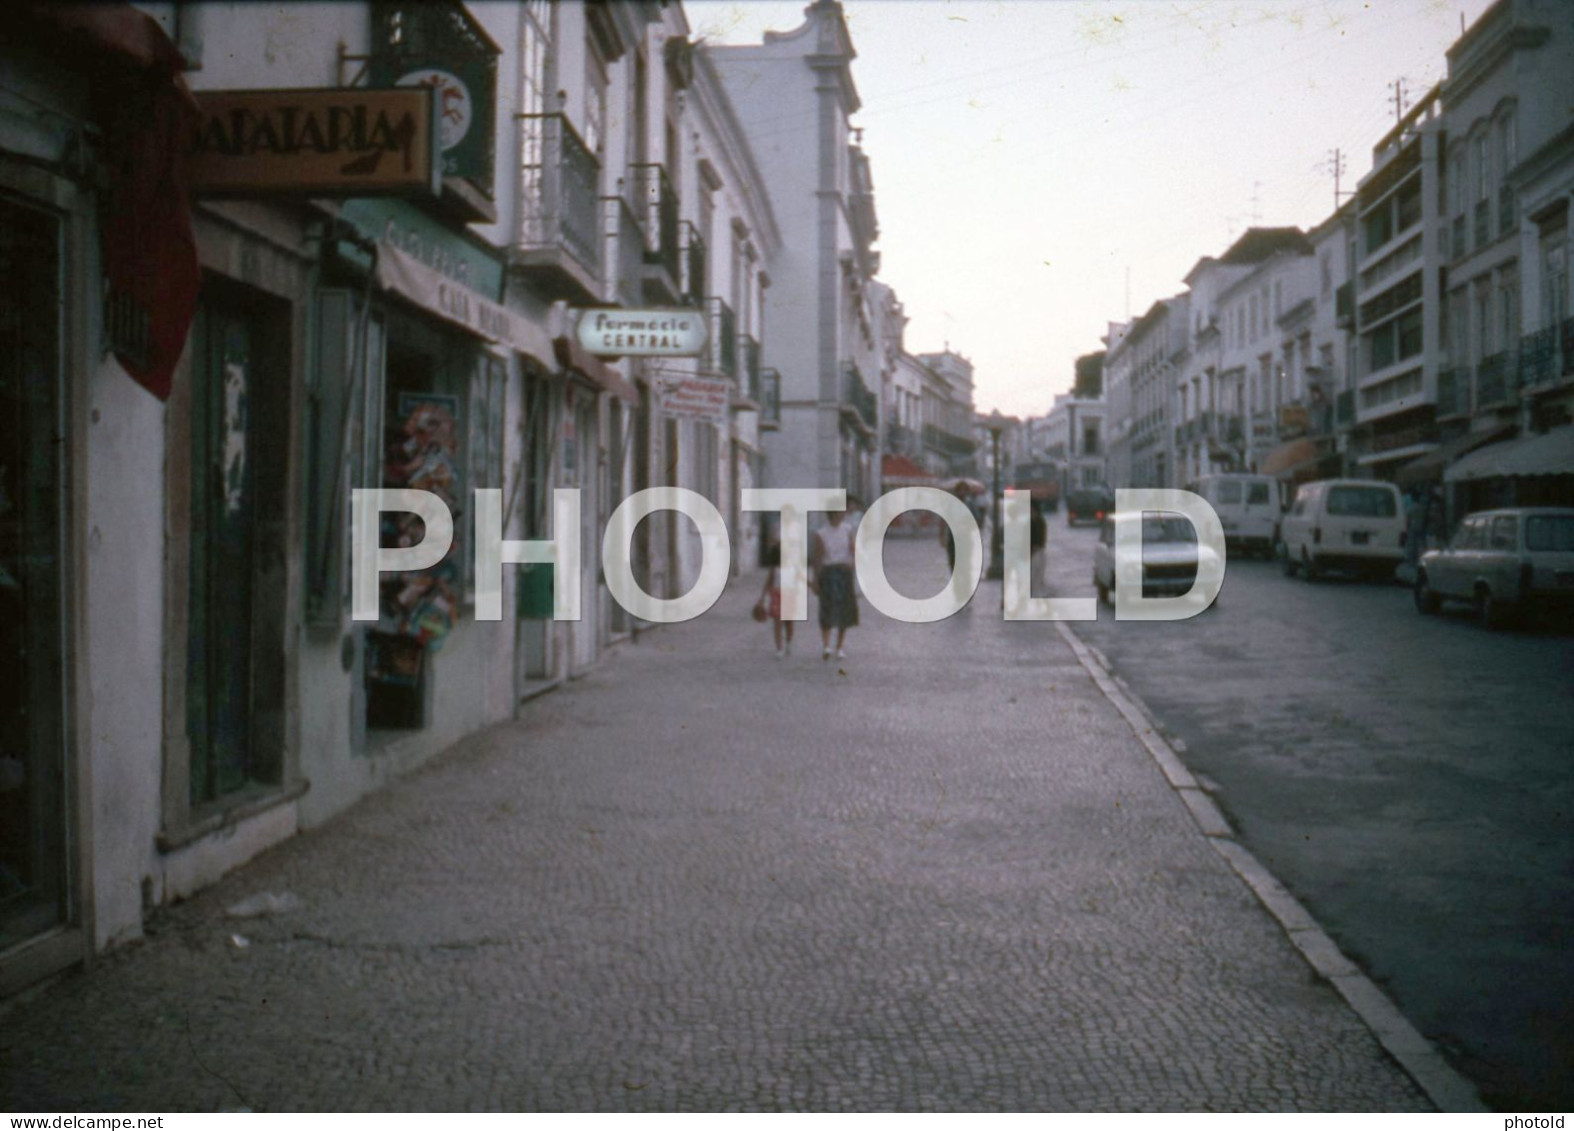 7 SLIDES SET 1984 ALGARVE PORTUGAL 16mm DIAPOSITIVE SLIDE Not PHOTO No FOTO Nb4084 - Diapositives (slides)